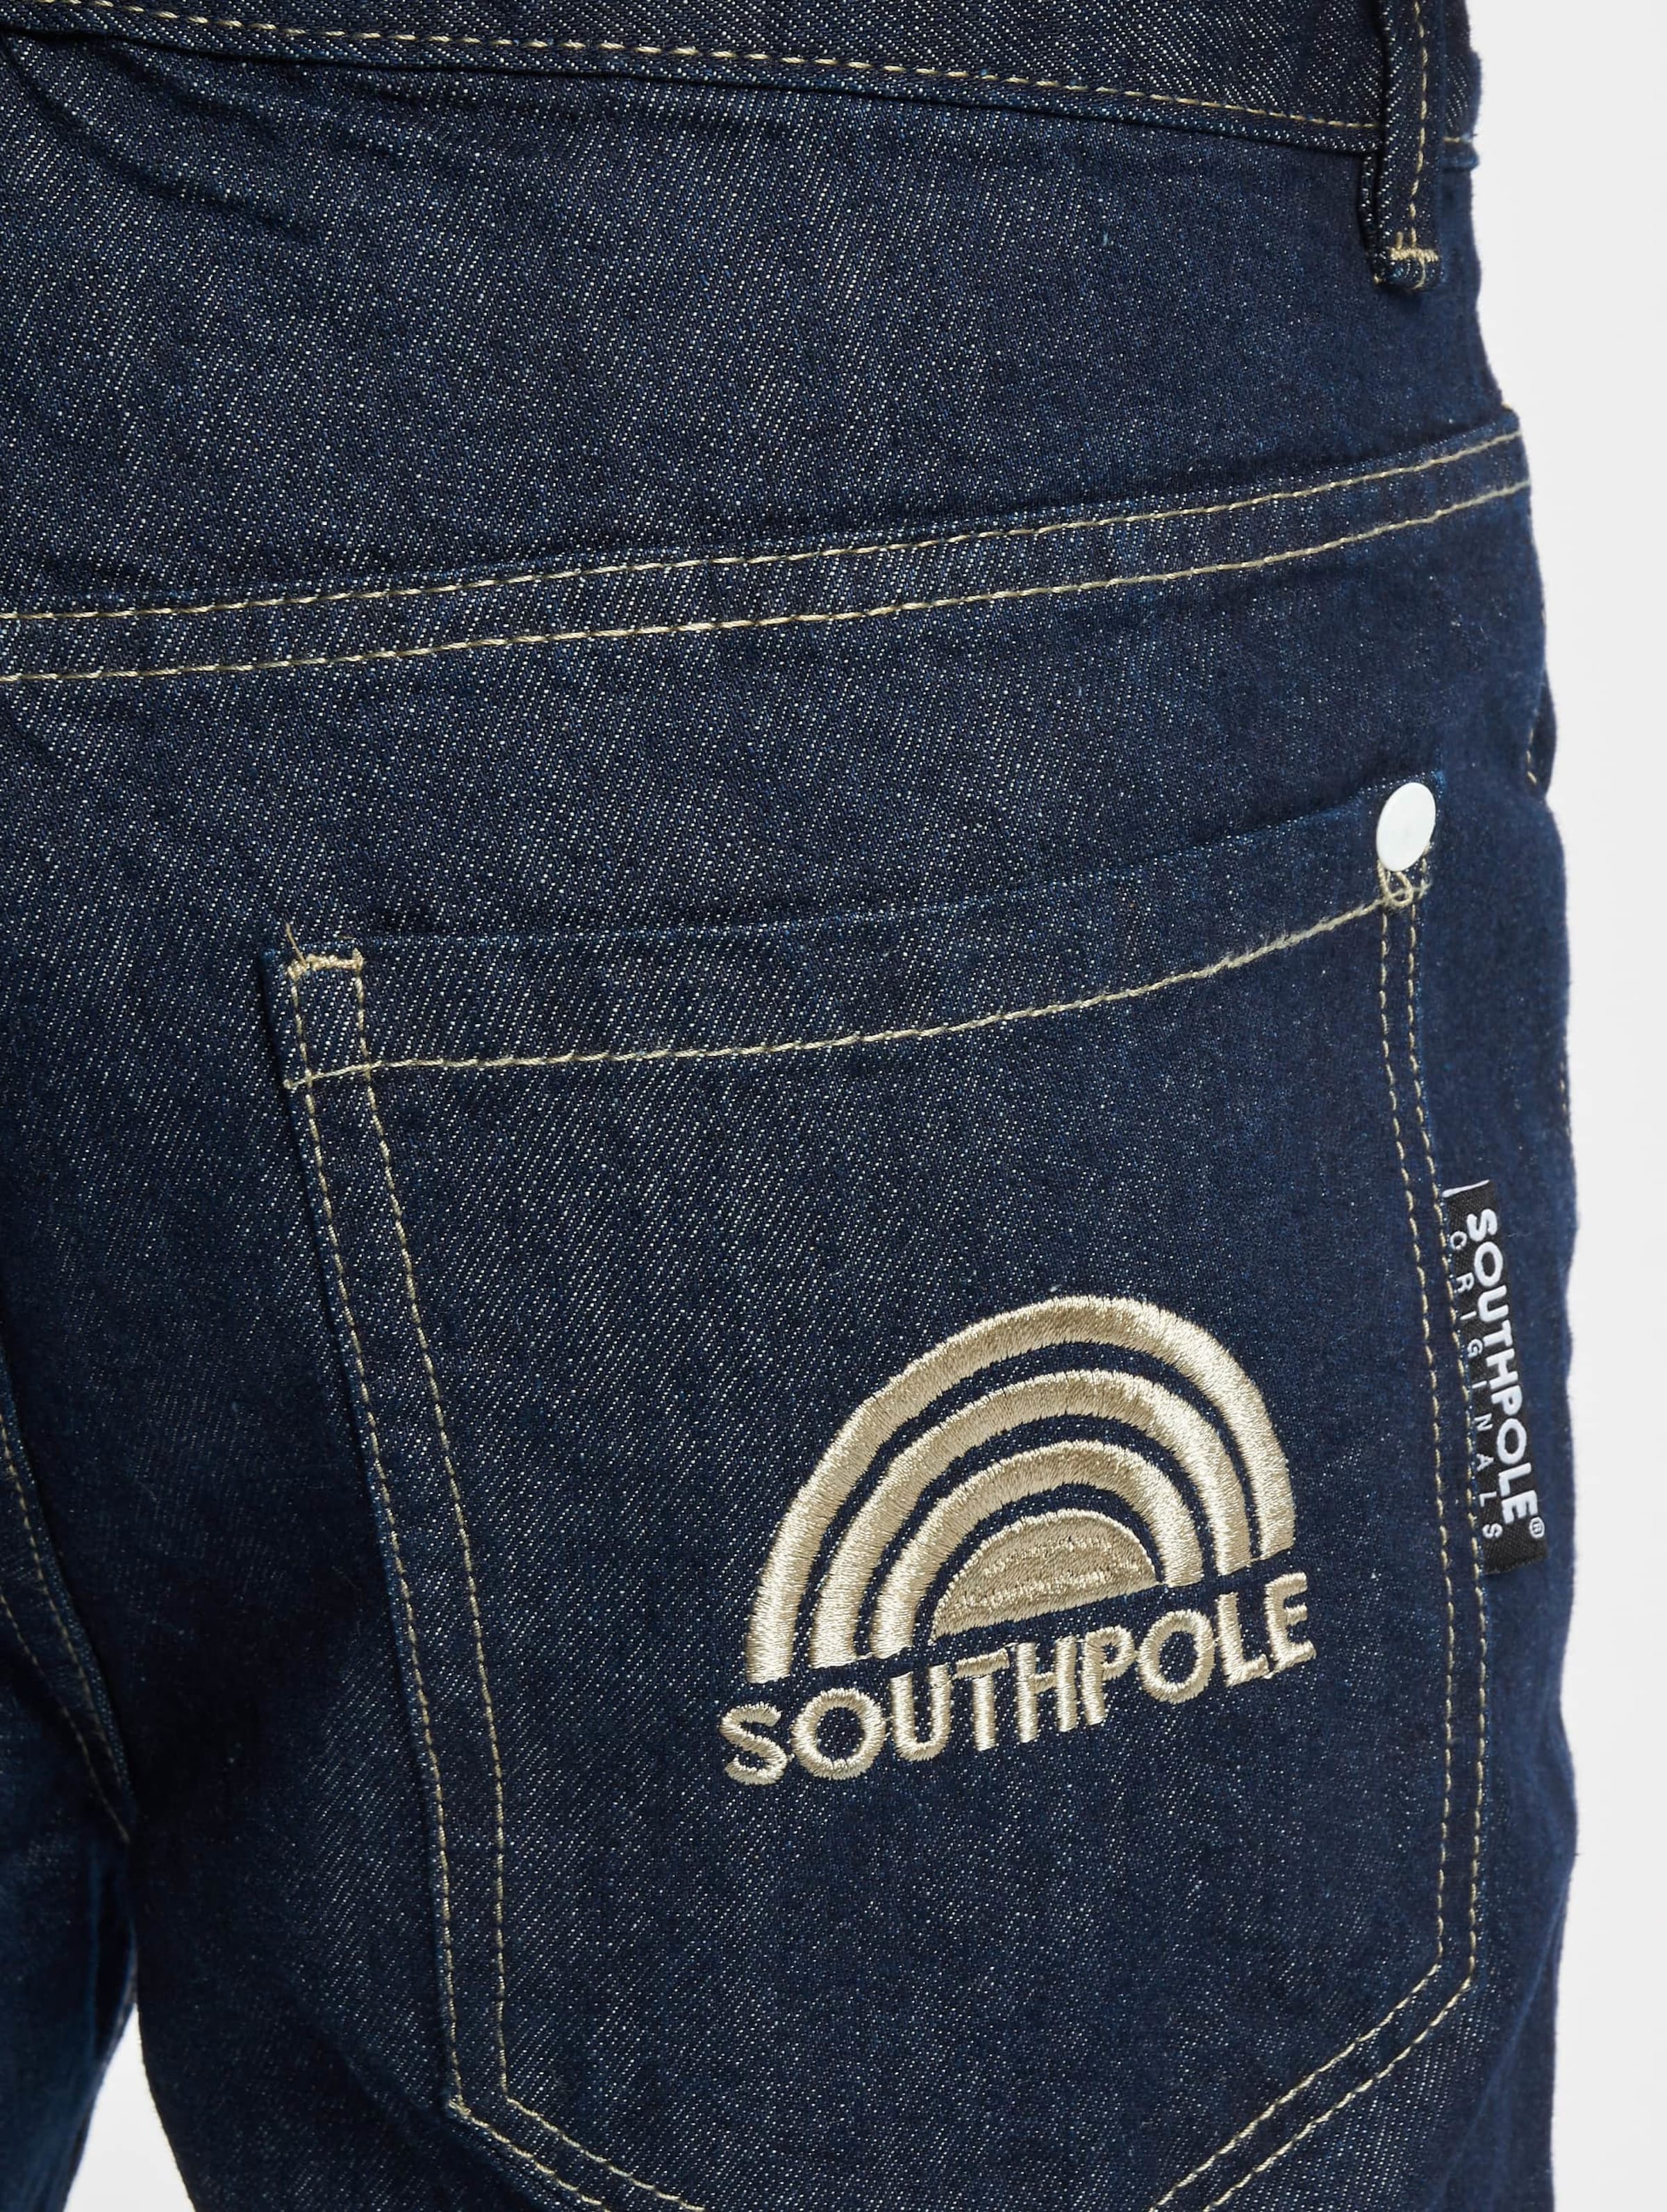 South Pole Jeans Women's Low Rise Stretch Flare Leg Denim Jeans Junior Y2K  Chic | Southpole jeans, Women jeans, Flares